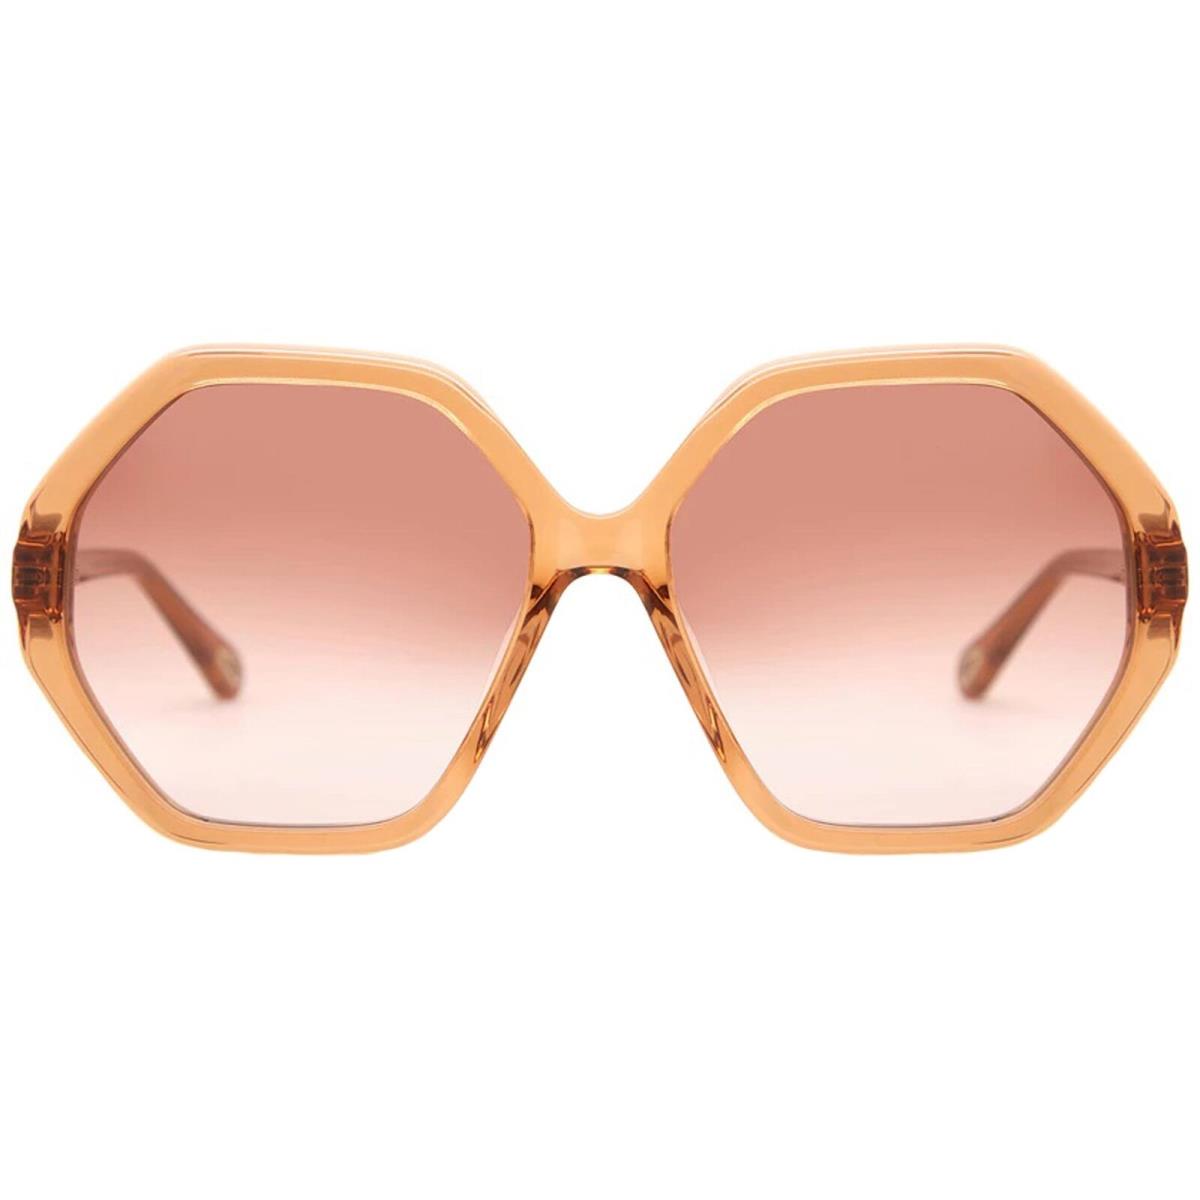 Chloe Women`s Sunglasses Orange Lens Acetate Square Frame CH0008SA-30009905001